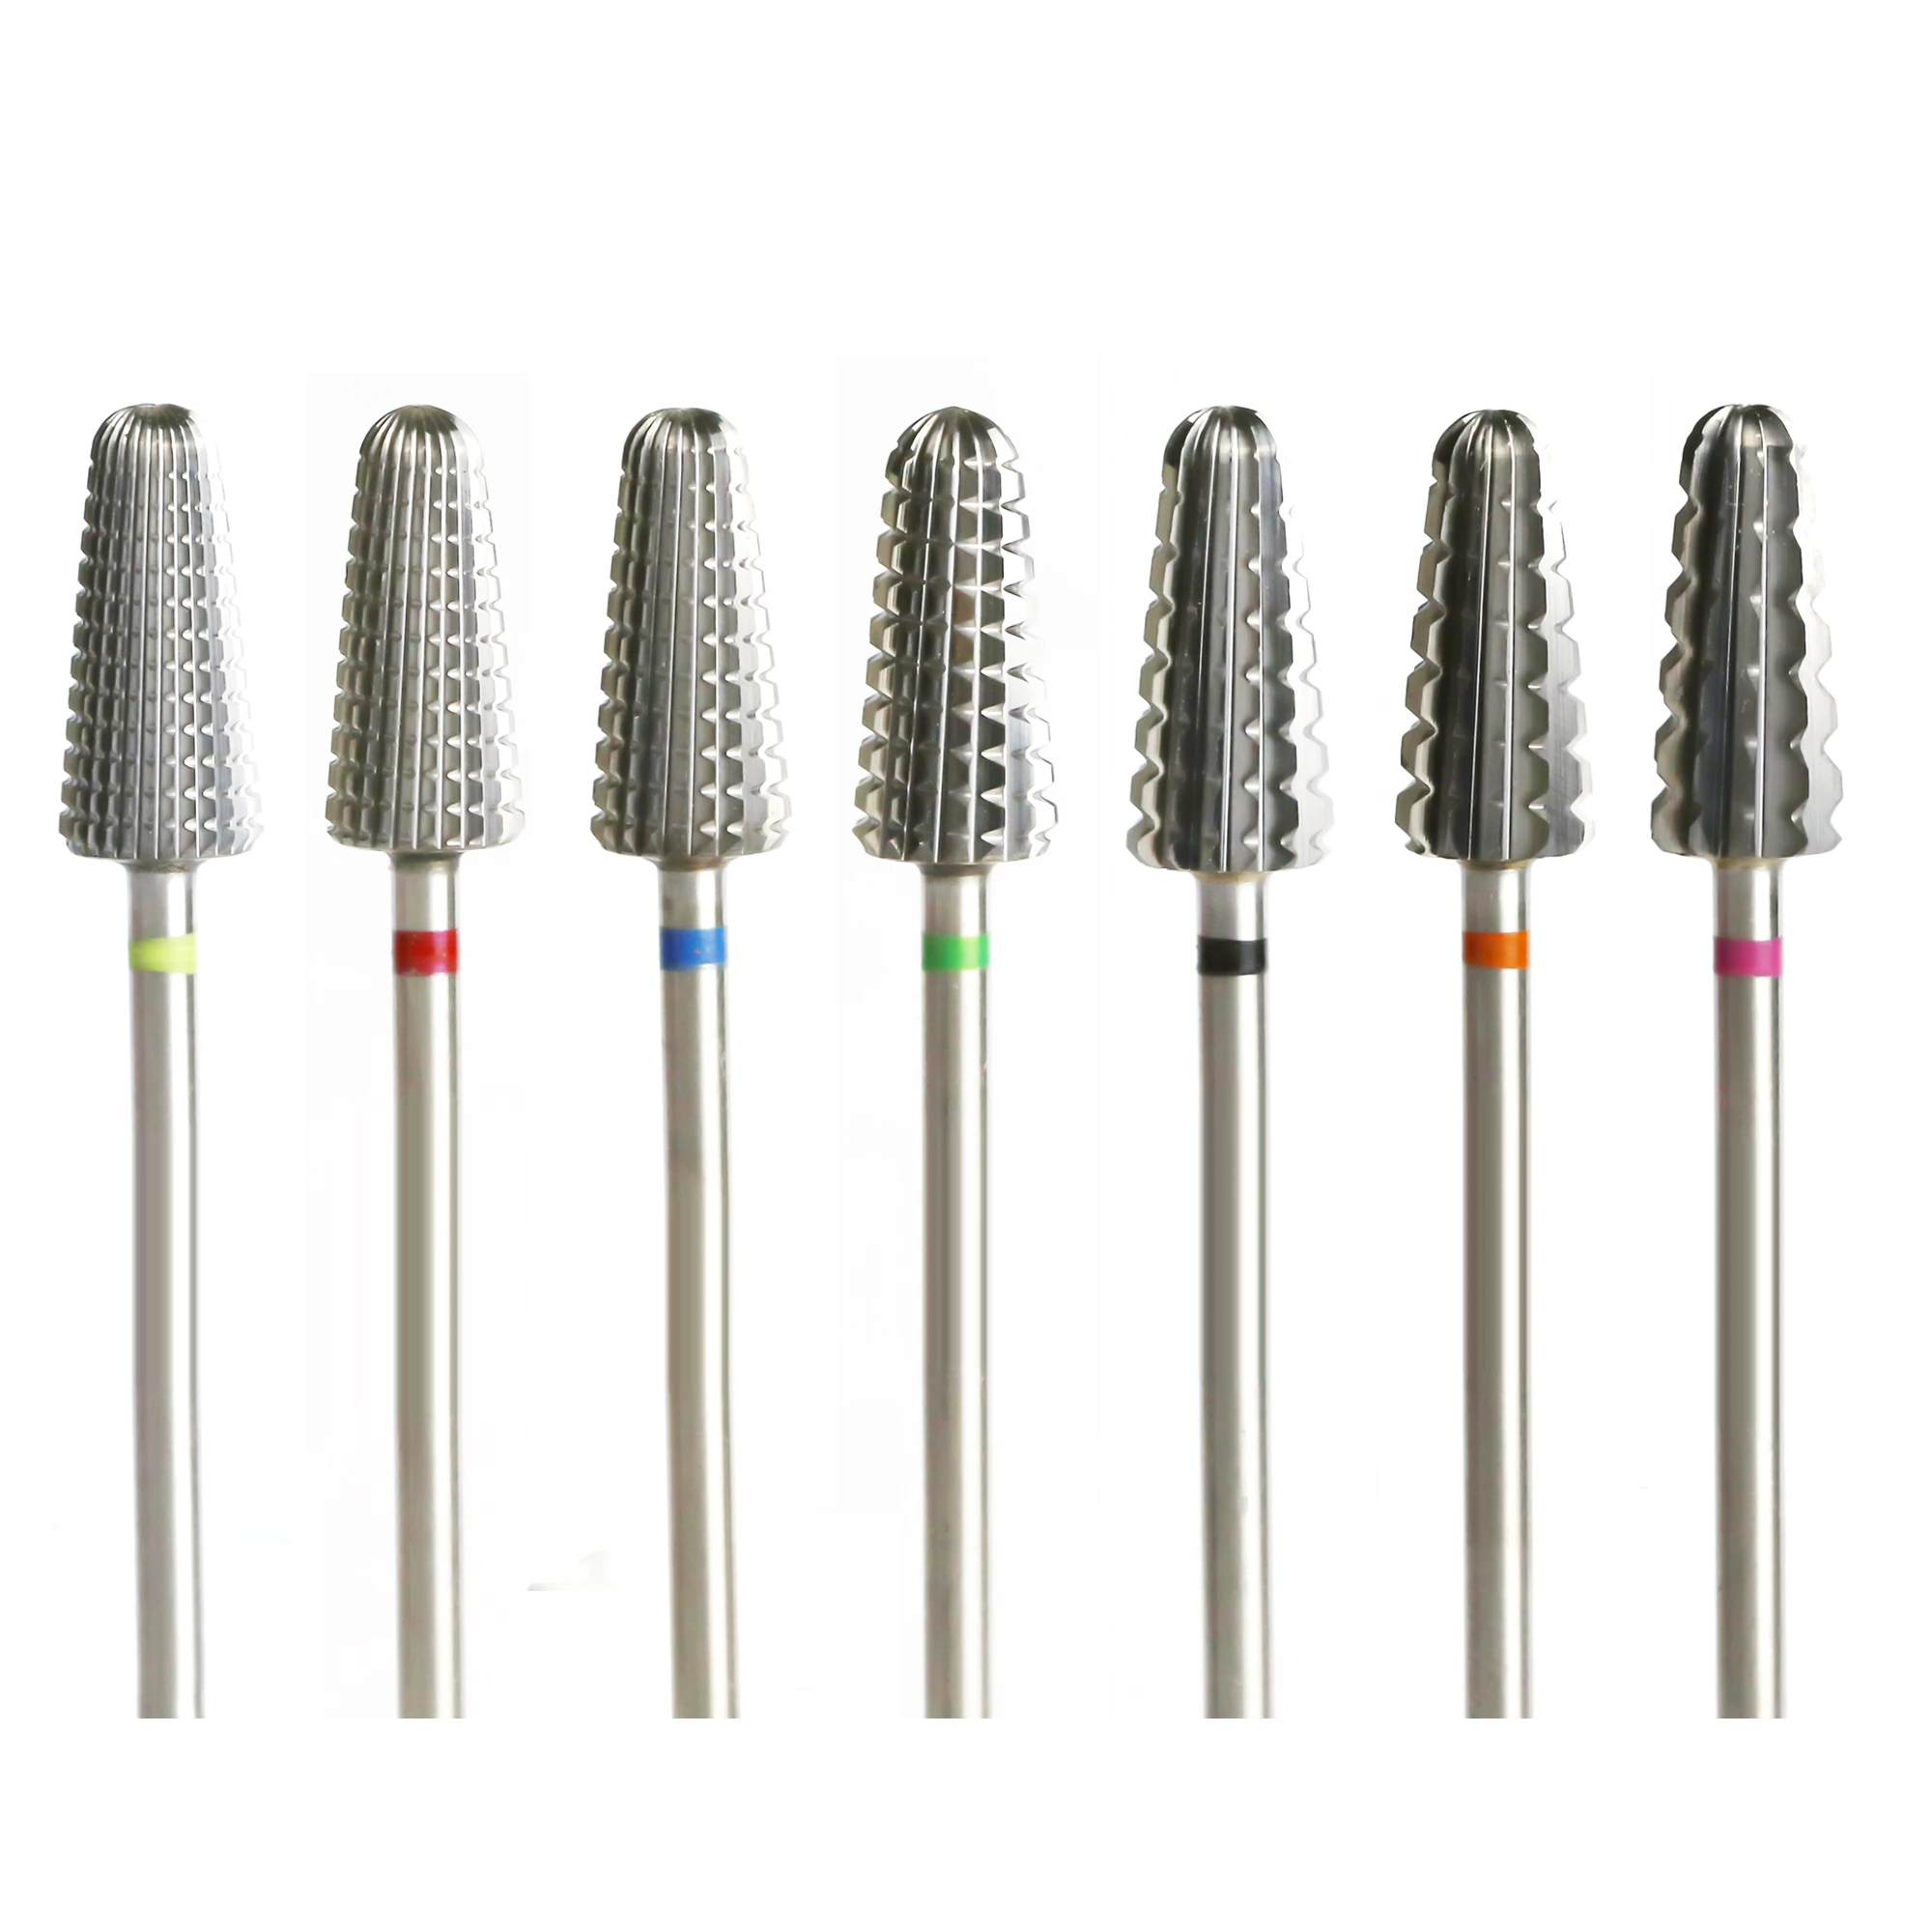 10PCS/Bag Milling Cutter Manicure Drill Bits Tungsten Carbide Nail Drill Bit Burr Remove Skin Rotary Gel Electric Manicure Tools